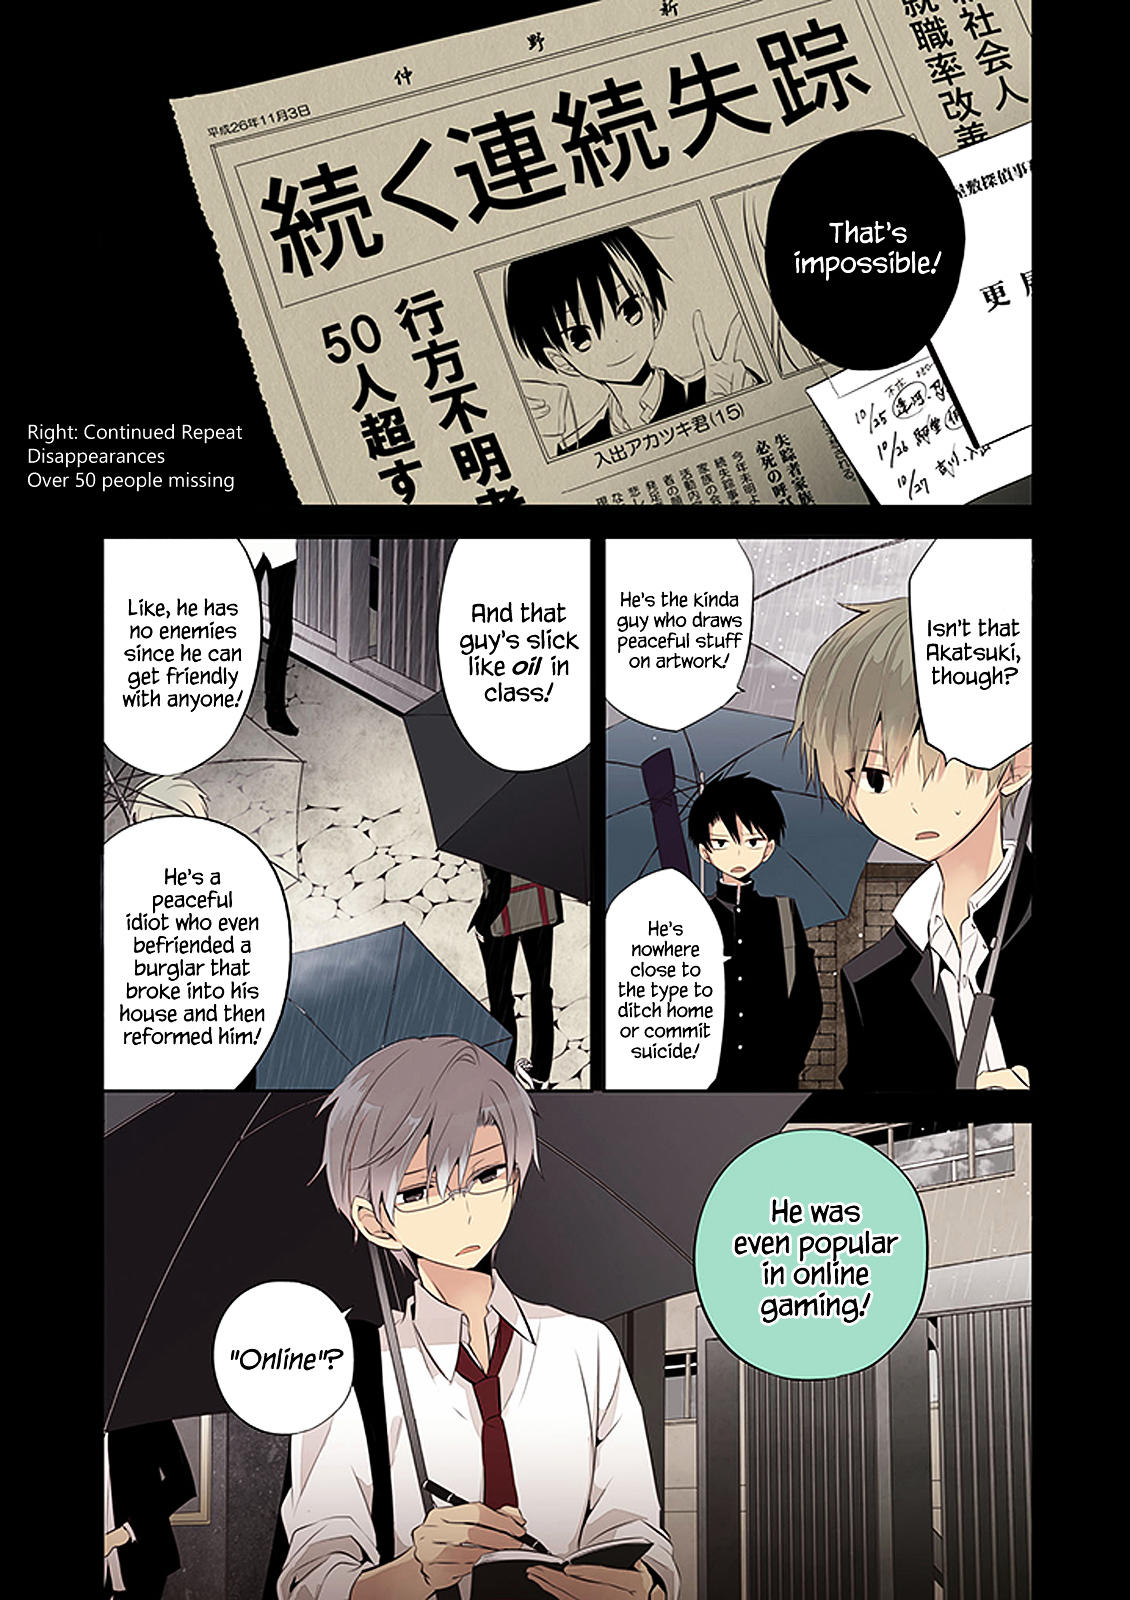 Read Naka No Hito Genome [Jikkyouchuu] Manga on Mangakakalot